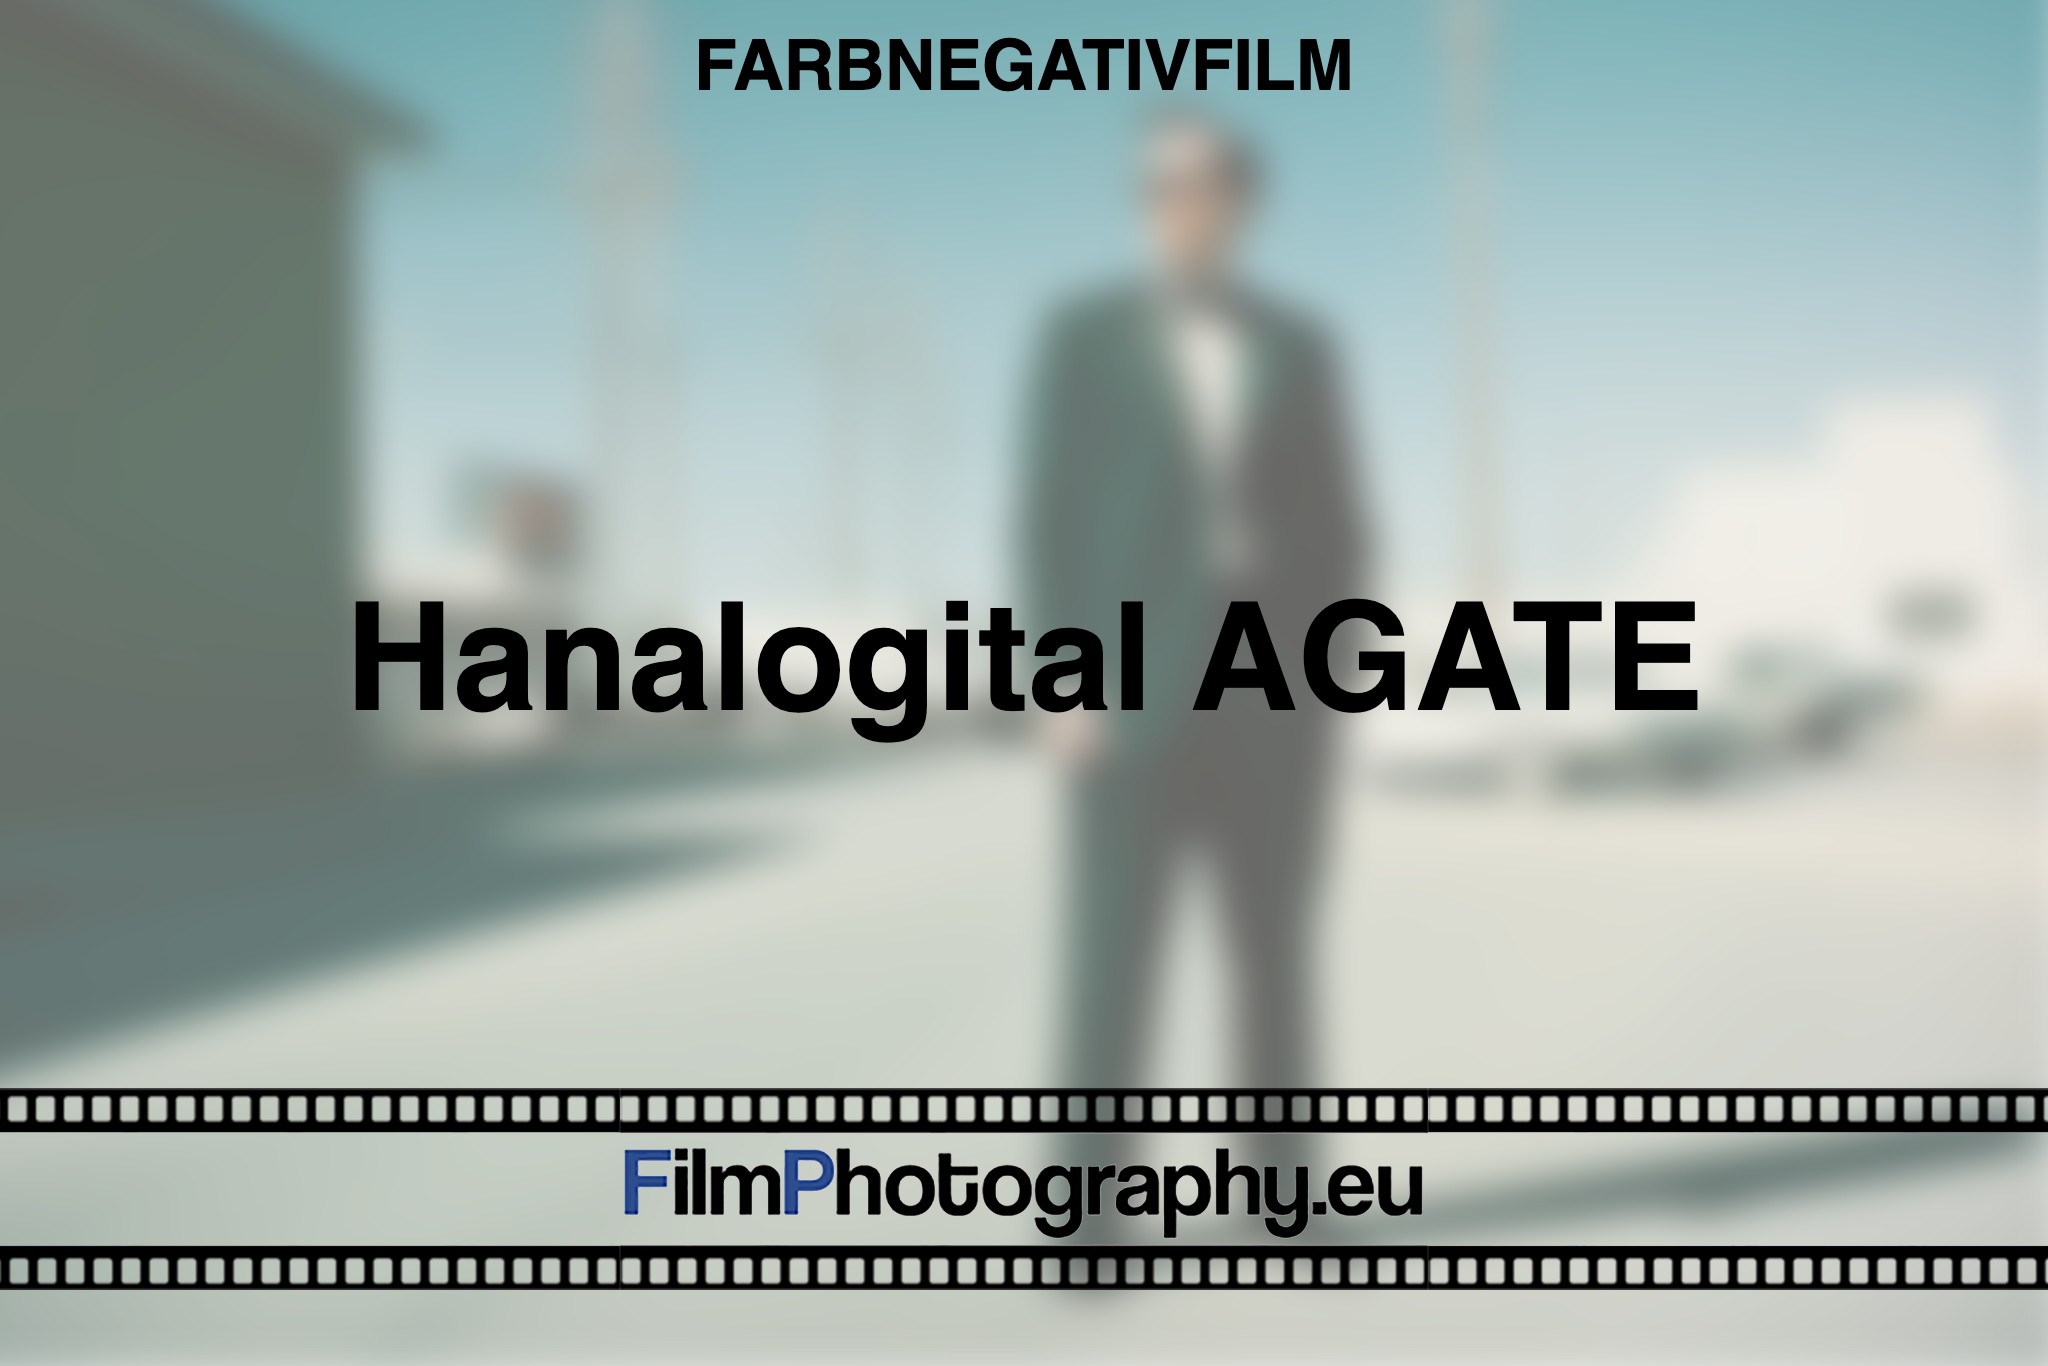 hanalogital-agate-farbnegativfilm-bnv